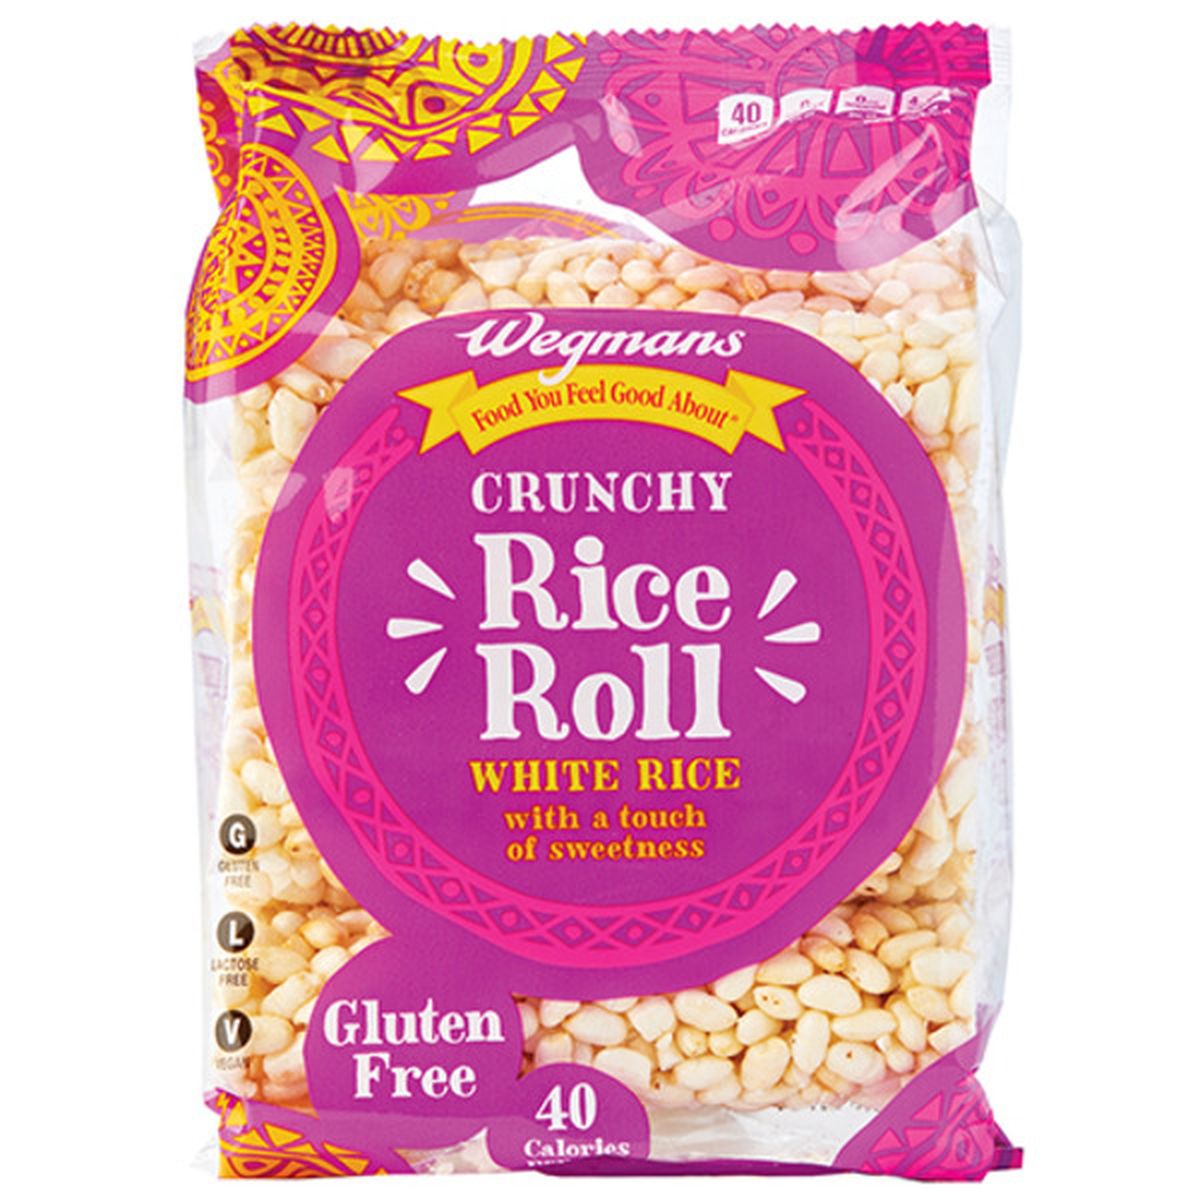 Calories in Wegmans Crunchy Rice Roll, White Rice